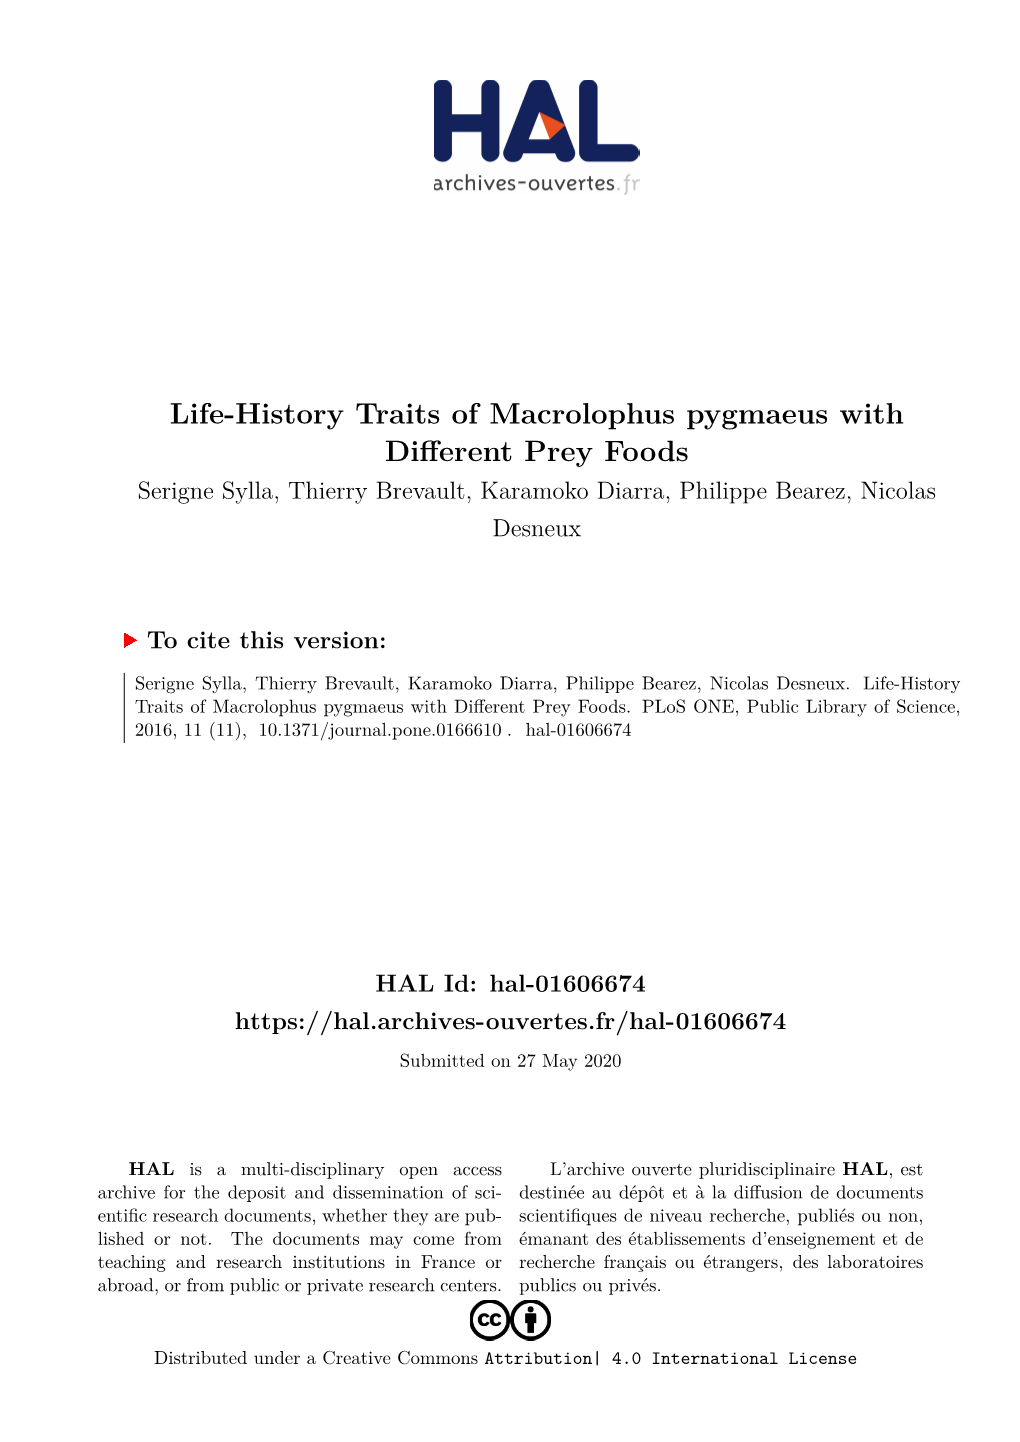 Life-History Traits of Macrolophus Pygmaeus with Different Prey Foods Serigne Sylla, Thierry Brevault, Karamoko Diarra, Philippe Bearez, Nicolas Desneux